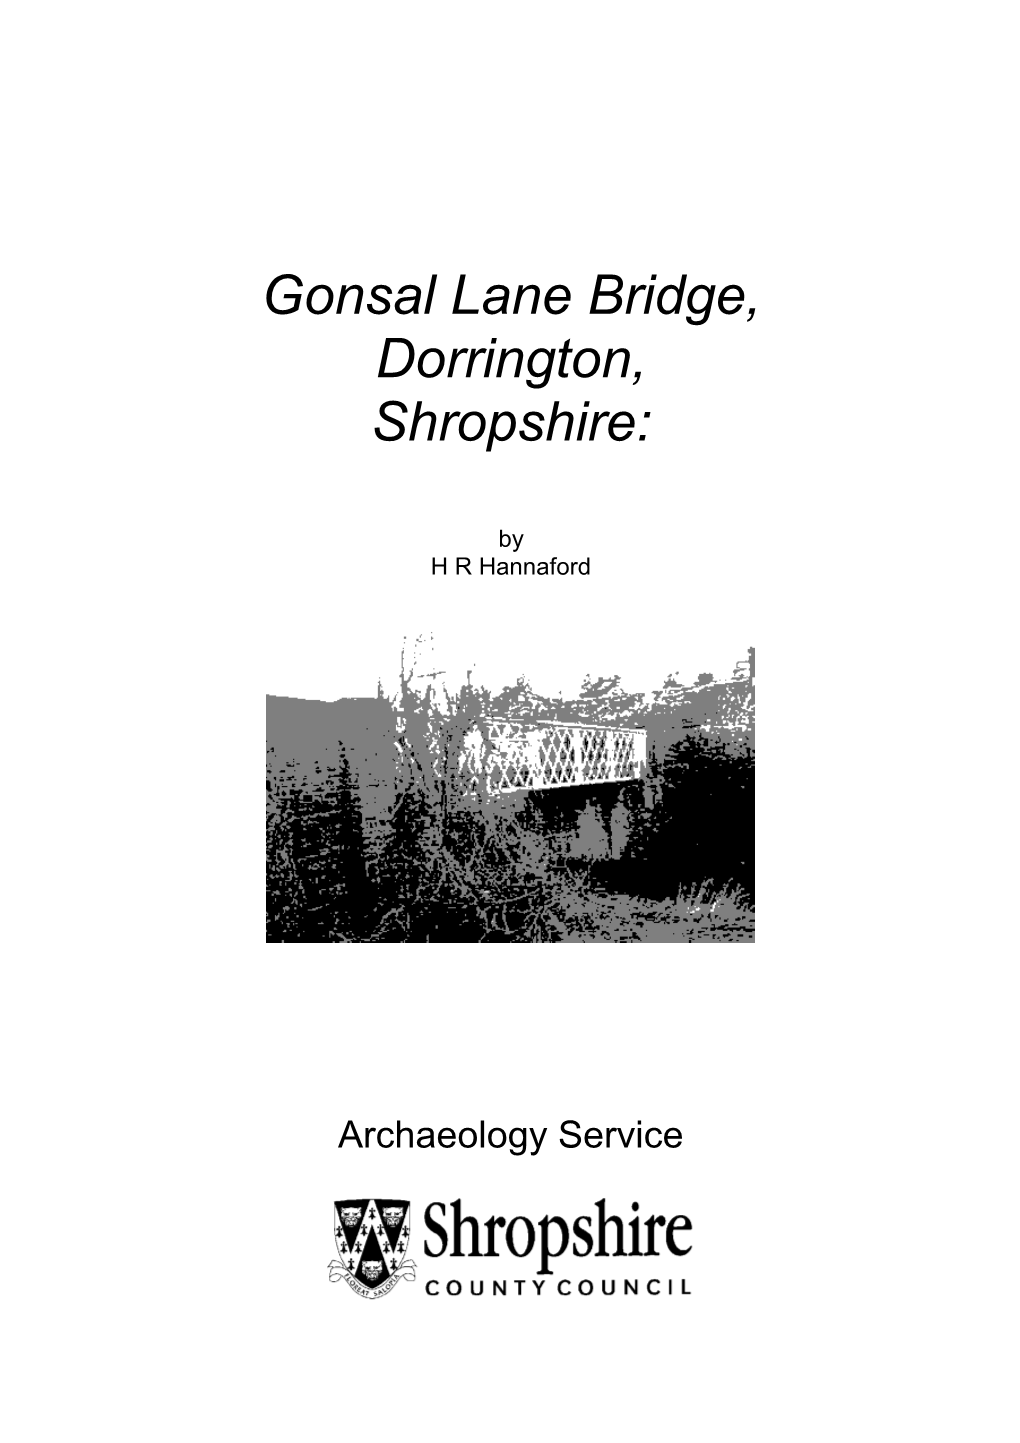 Gonsal Lane Bridge, Dorrington, Shropshire